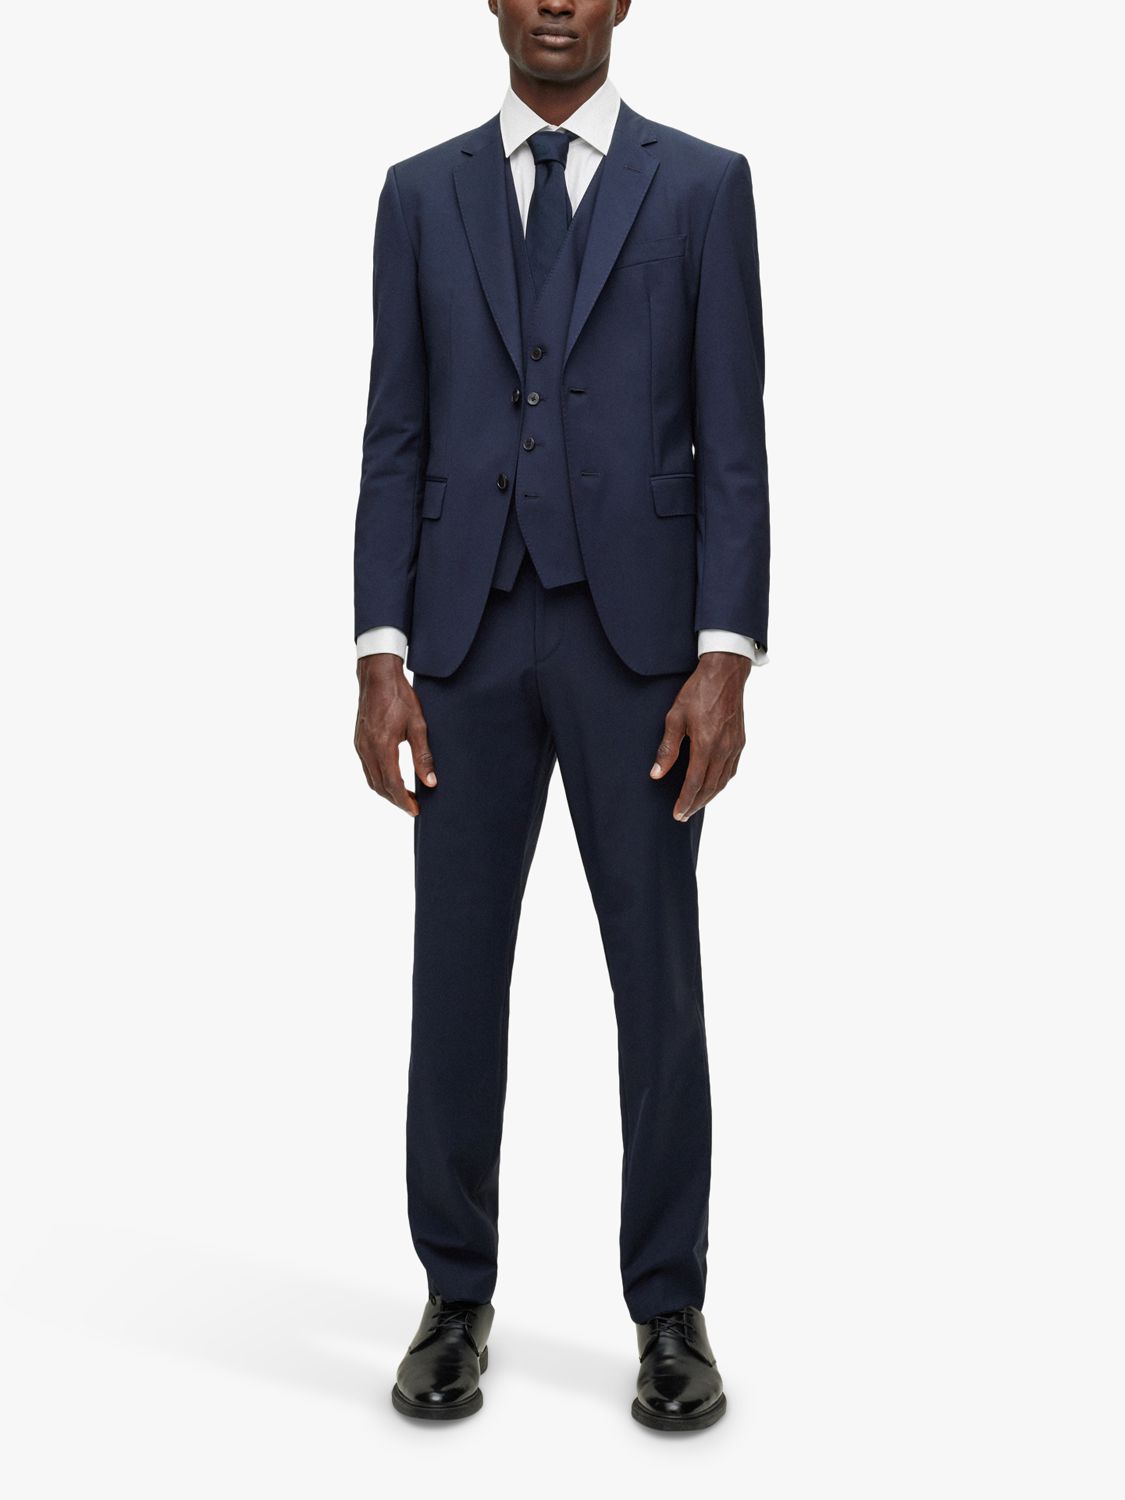 HUGO BOSS Leon Regular Fit Wool Blend Suit Trousers, Dark Blue, 36R